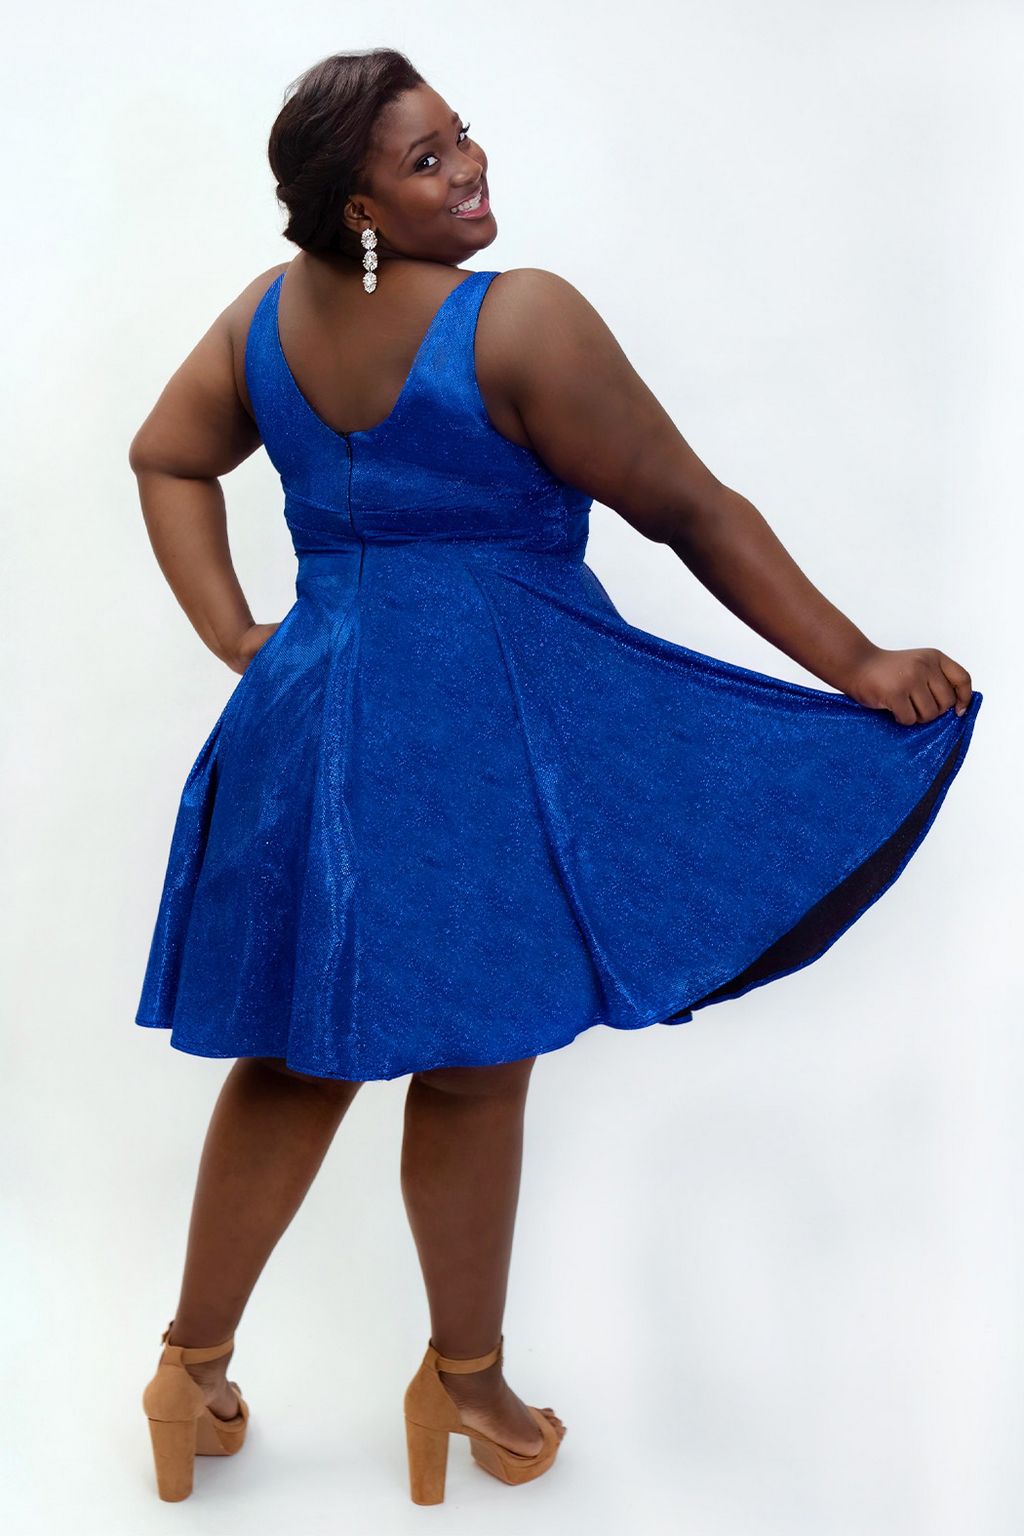 Plus Size Dresses Plus Size Short Sleeveless Homecoming Dress Blue